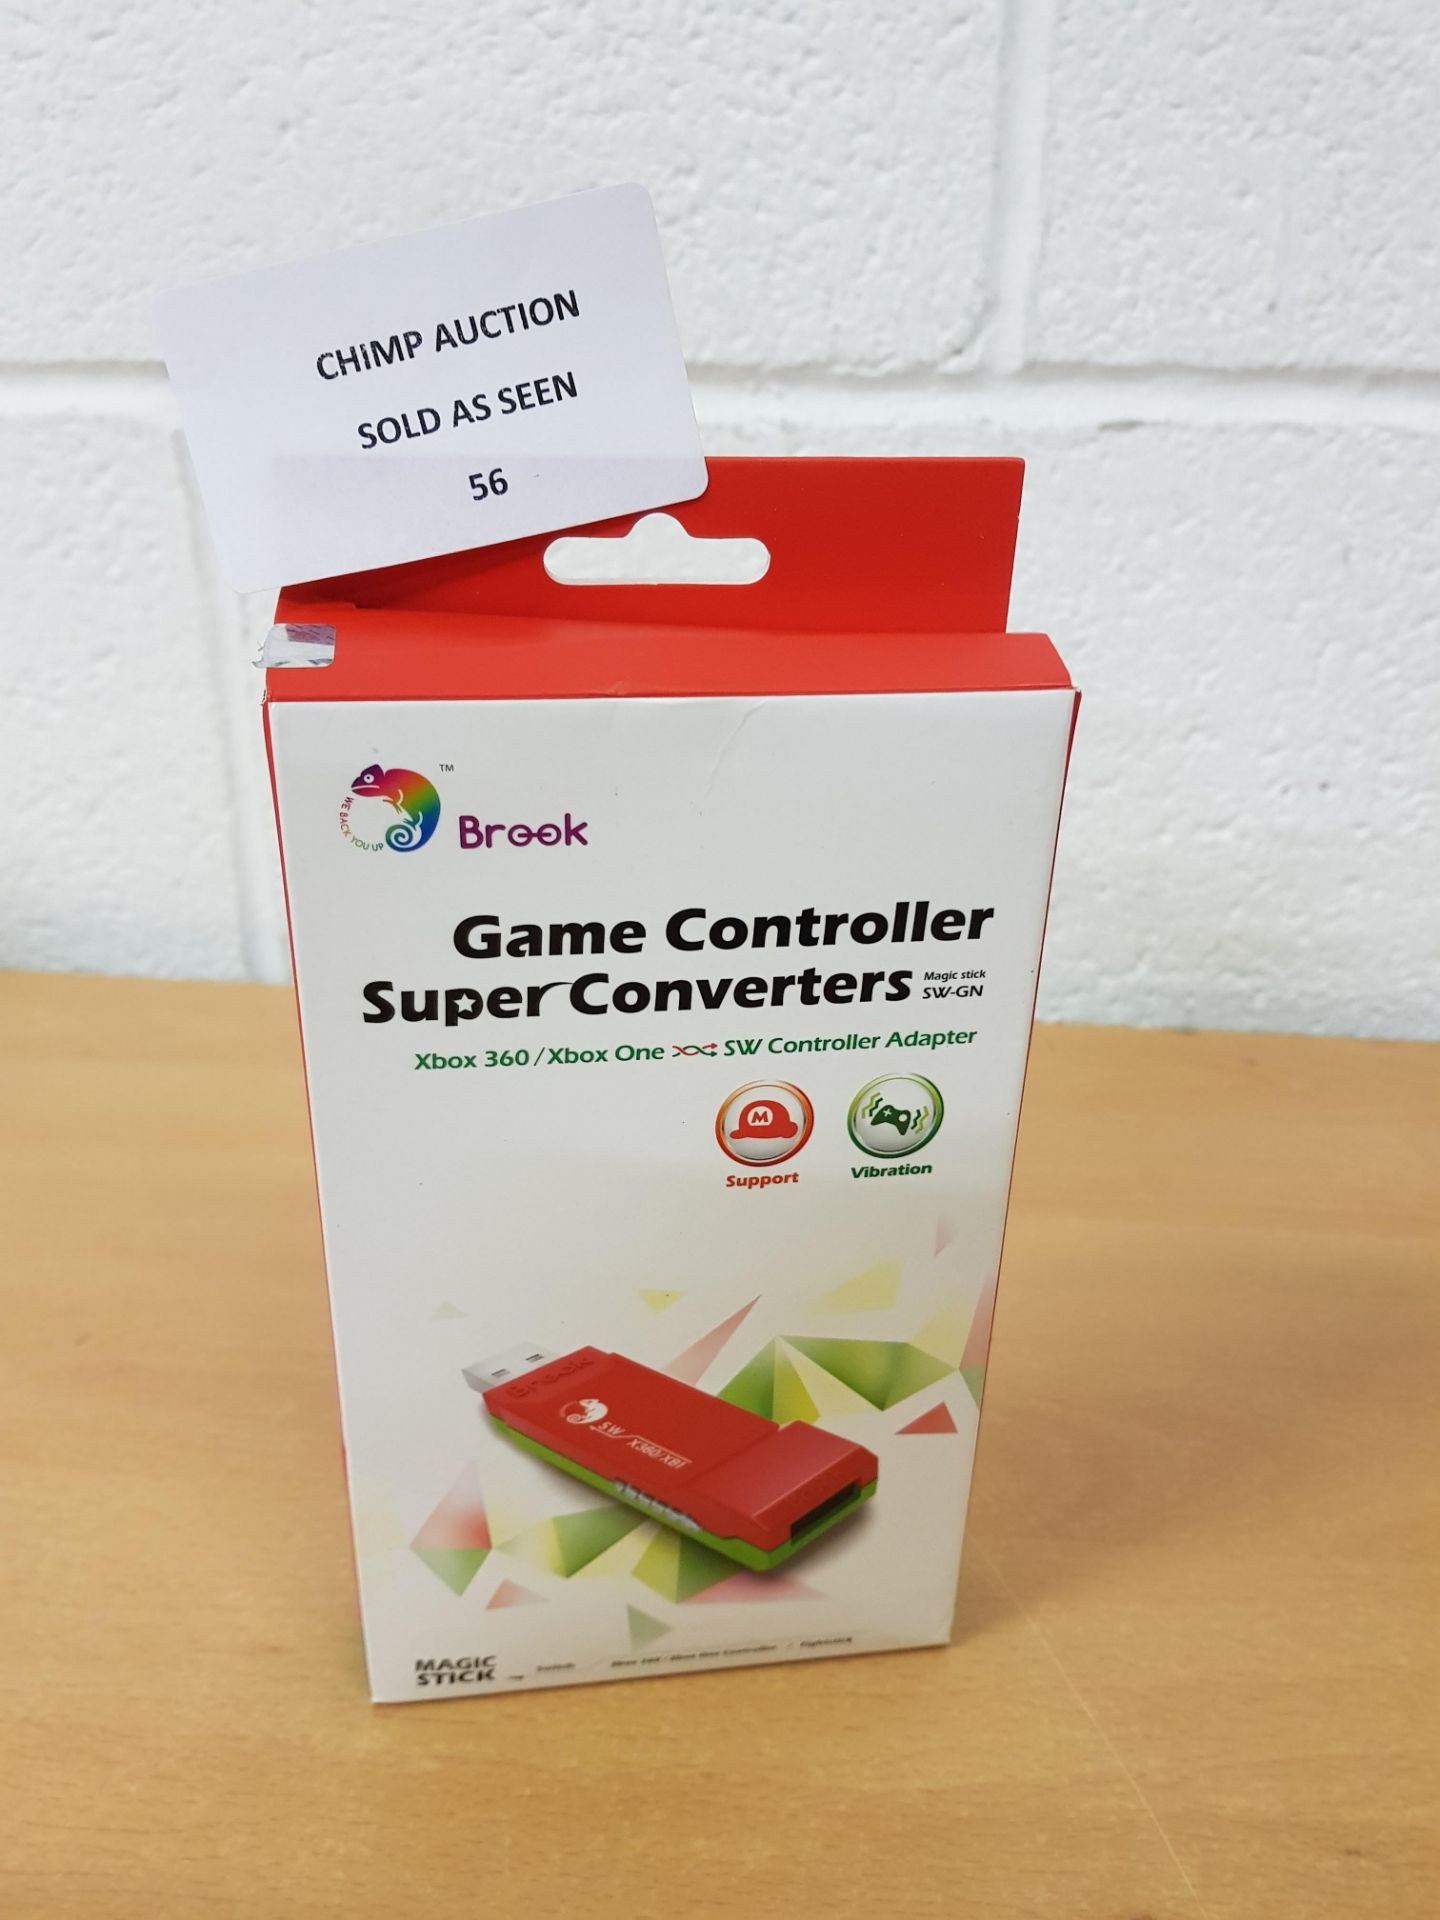 Brook Game Controller super converters